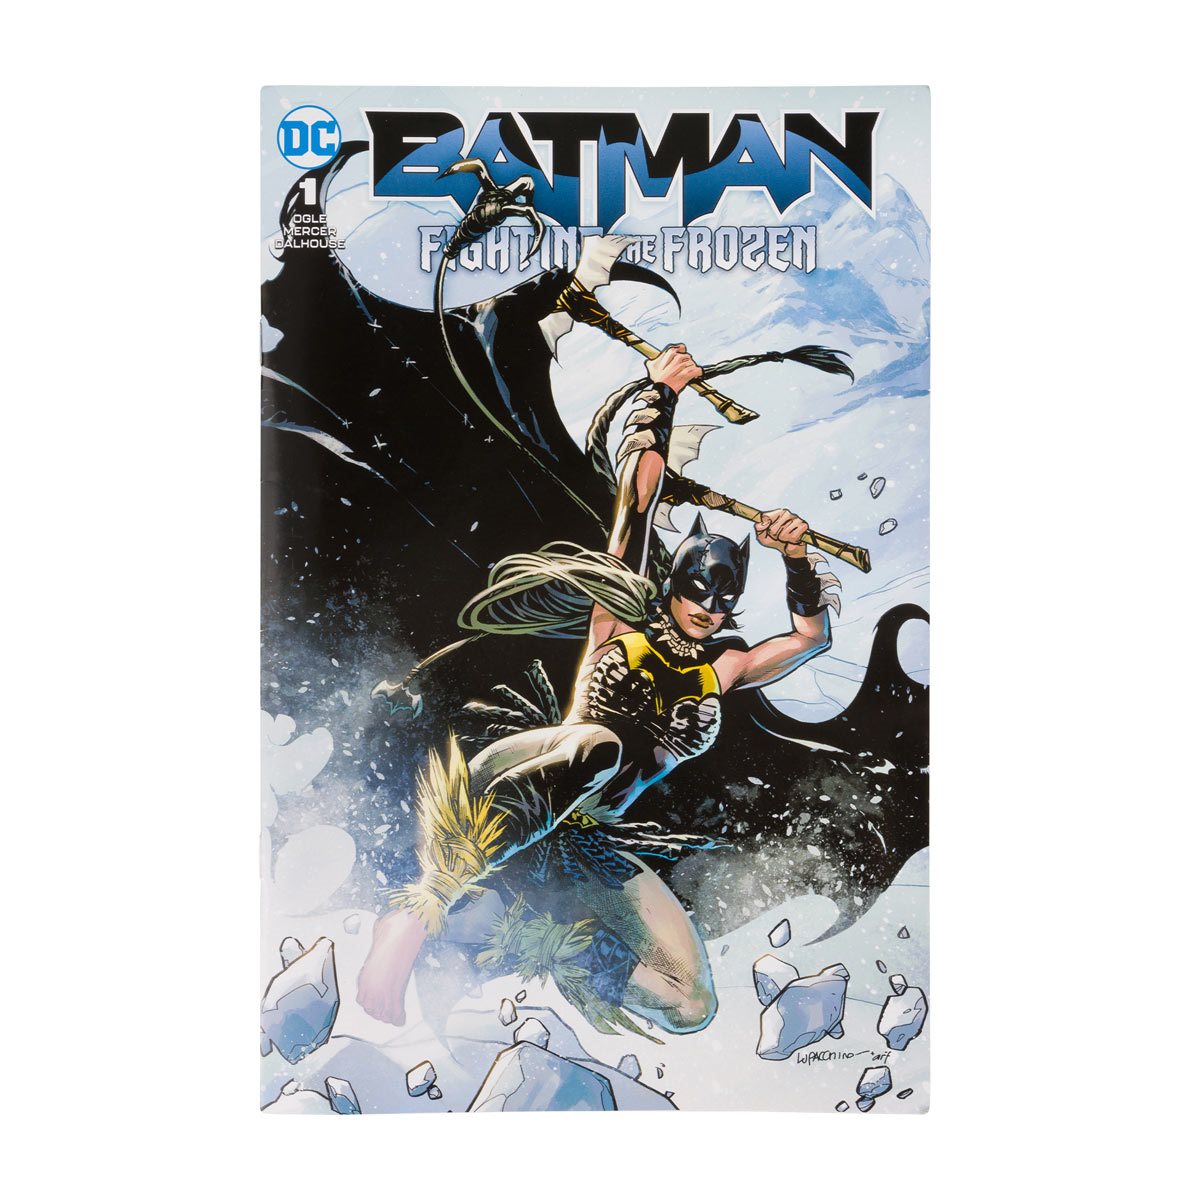 Batman fighting the frozen - Batgirl Action figure with comic book - Heretoserveyou